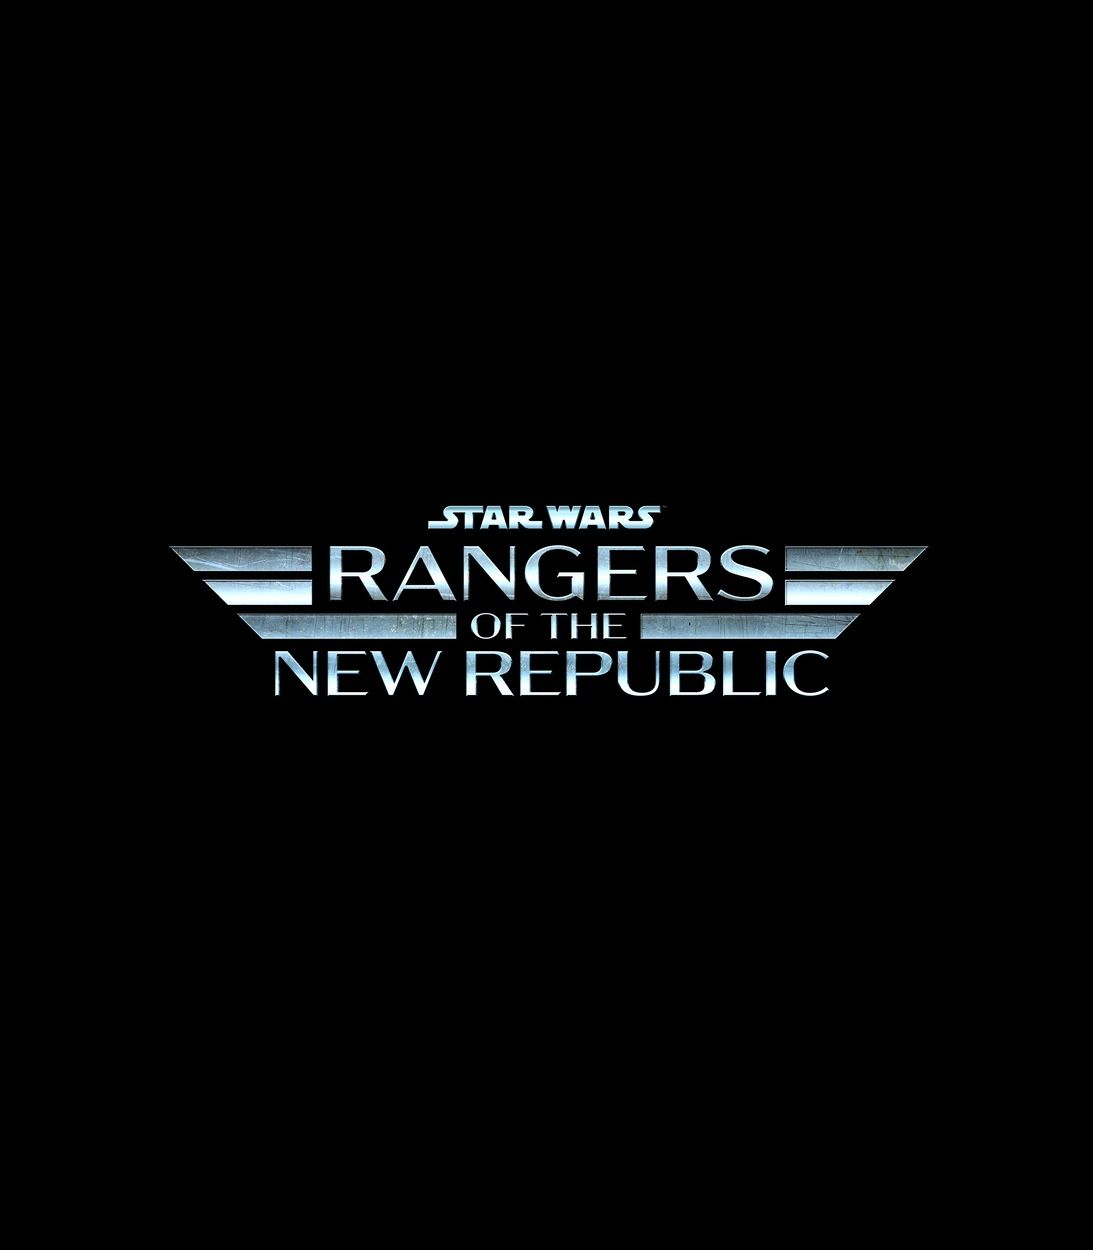 Star Wars Rangers of the New Republic TV show logo